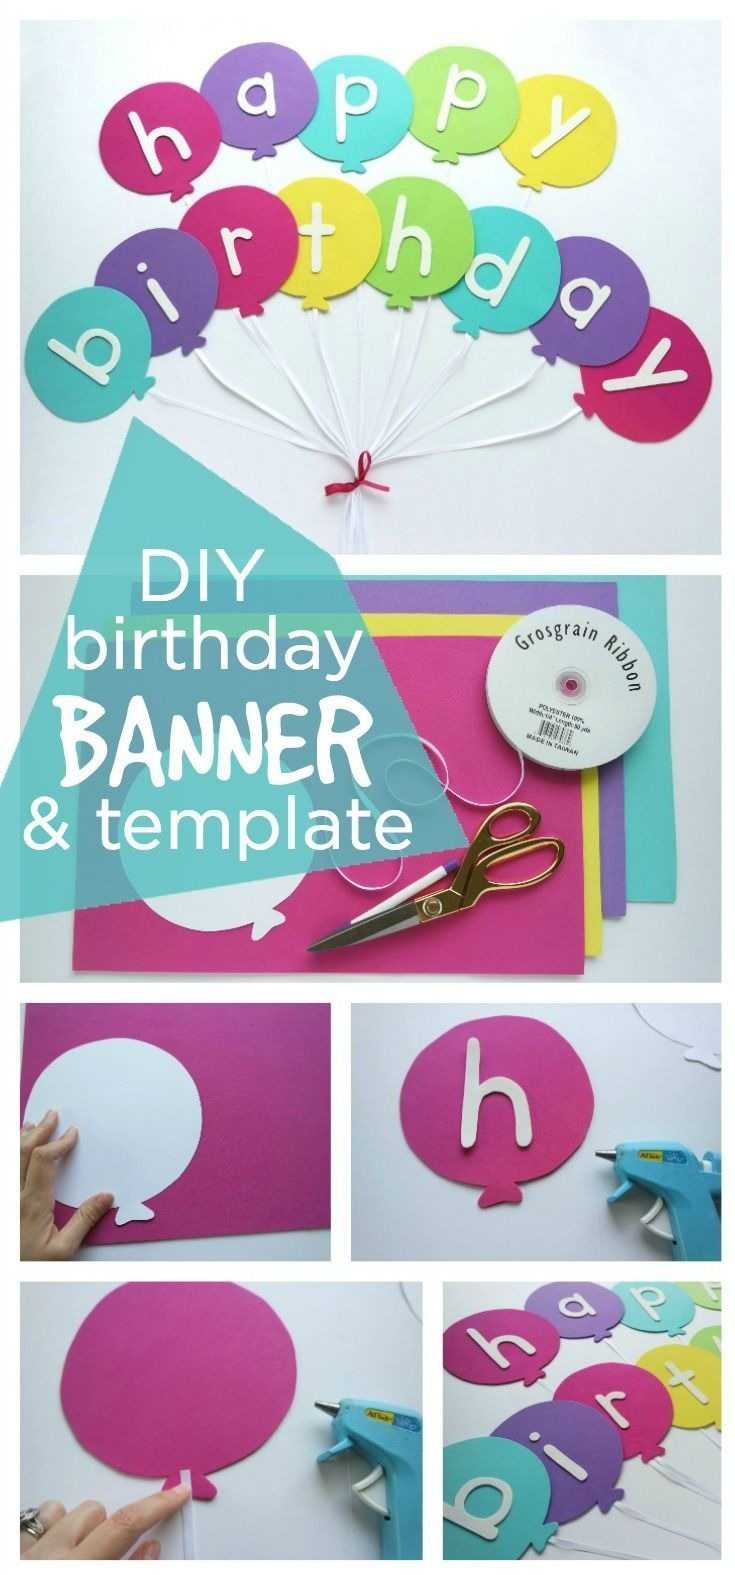 Happy Birthday Banner Diy Template – Birthday Decor For Diy Birthday Banner Template